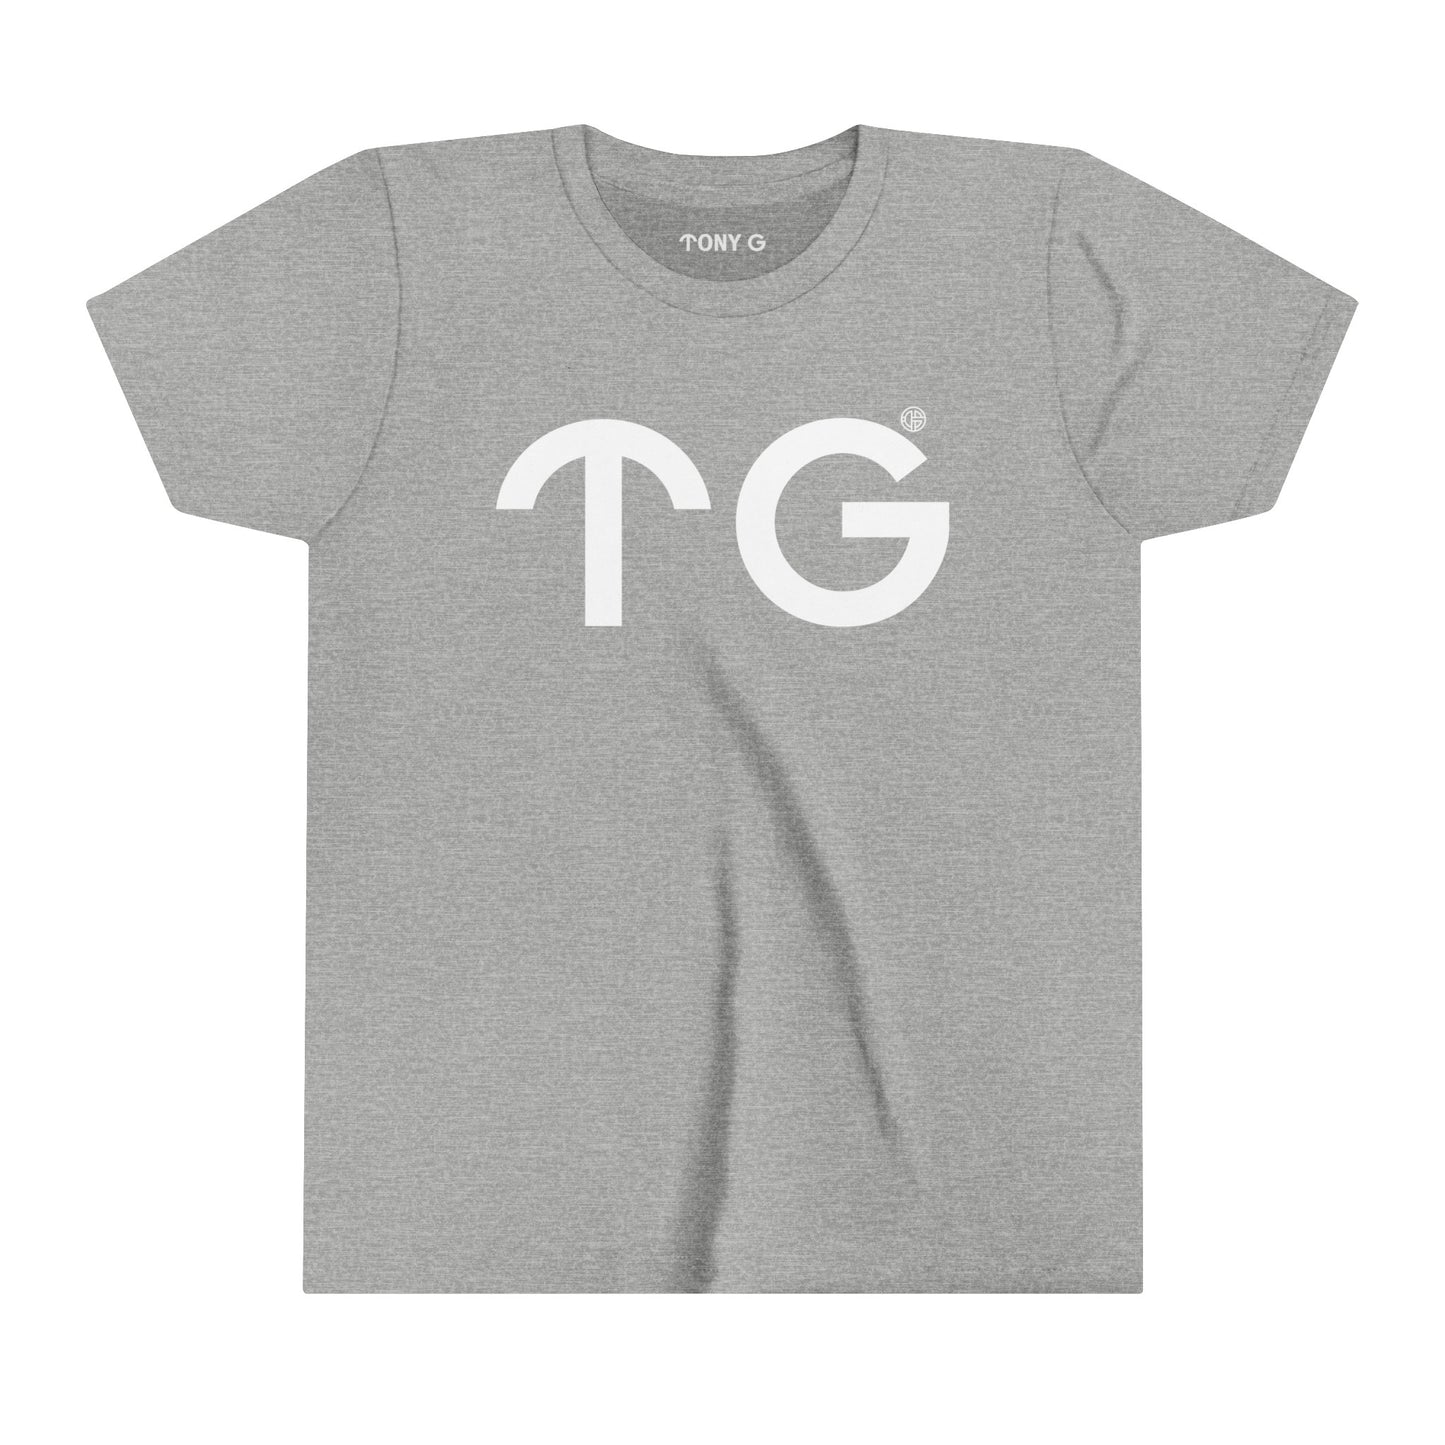 TONY G Youth Short Sleeve Tee, featuring the T&G Logo